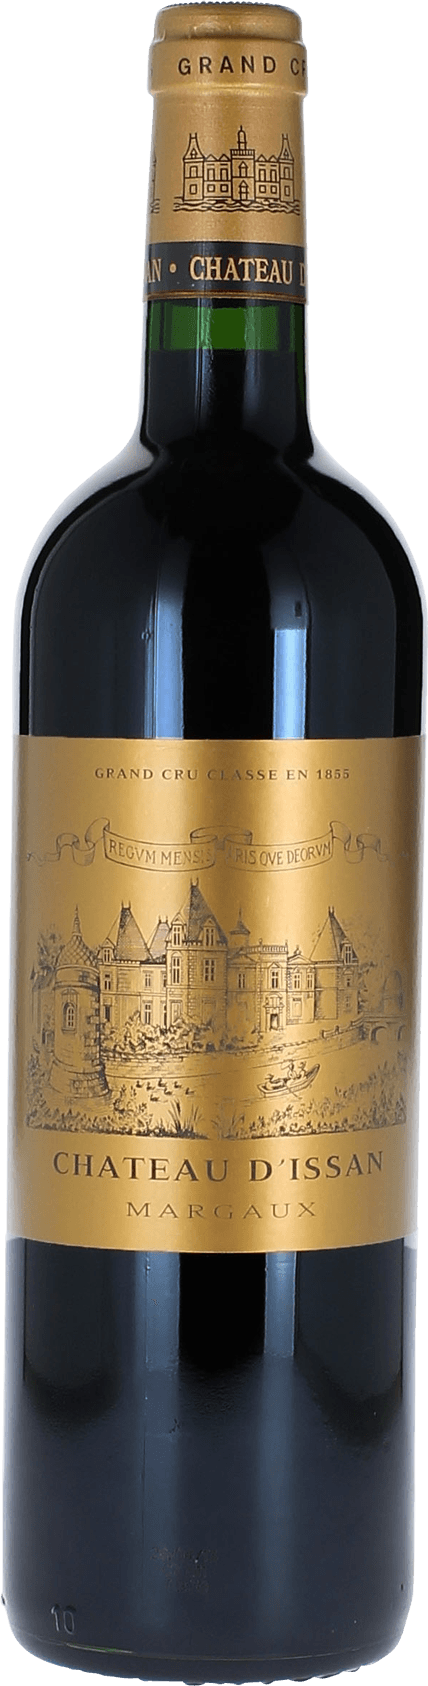 Issan 1997 3me Grand cru class Margaux, Bordeaux rouge